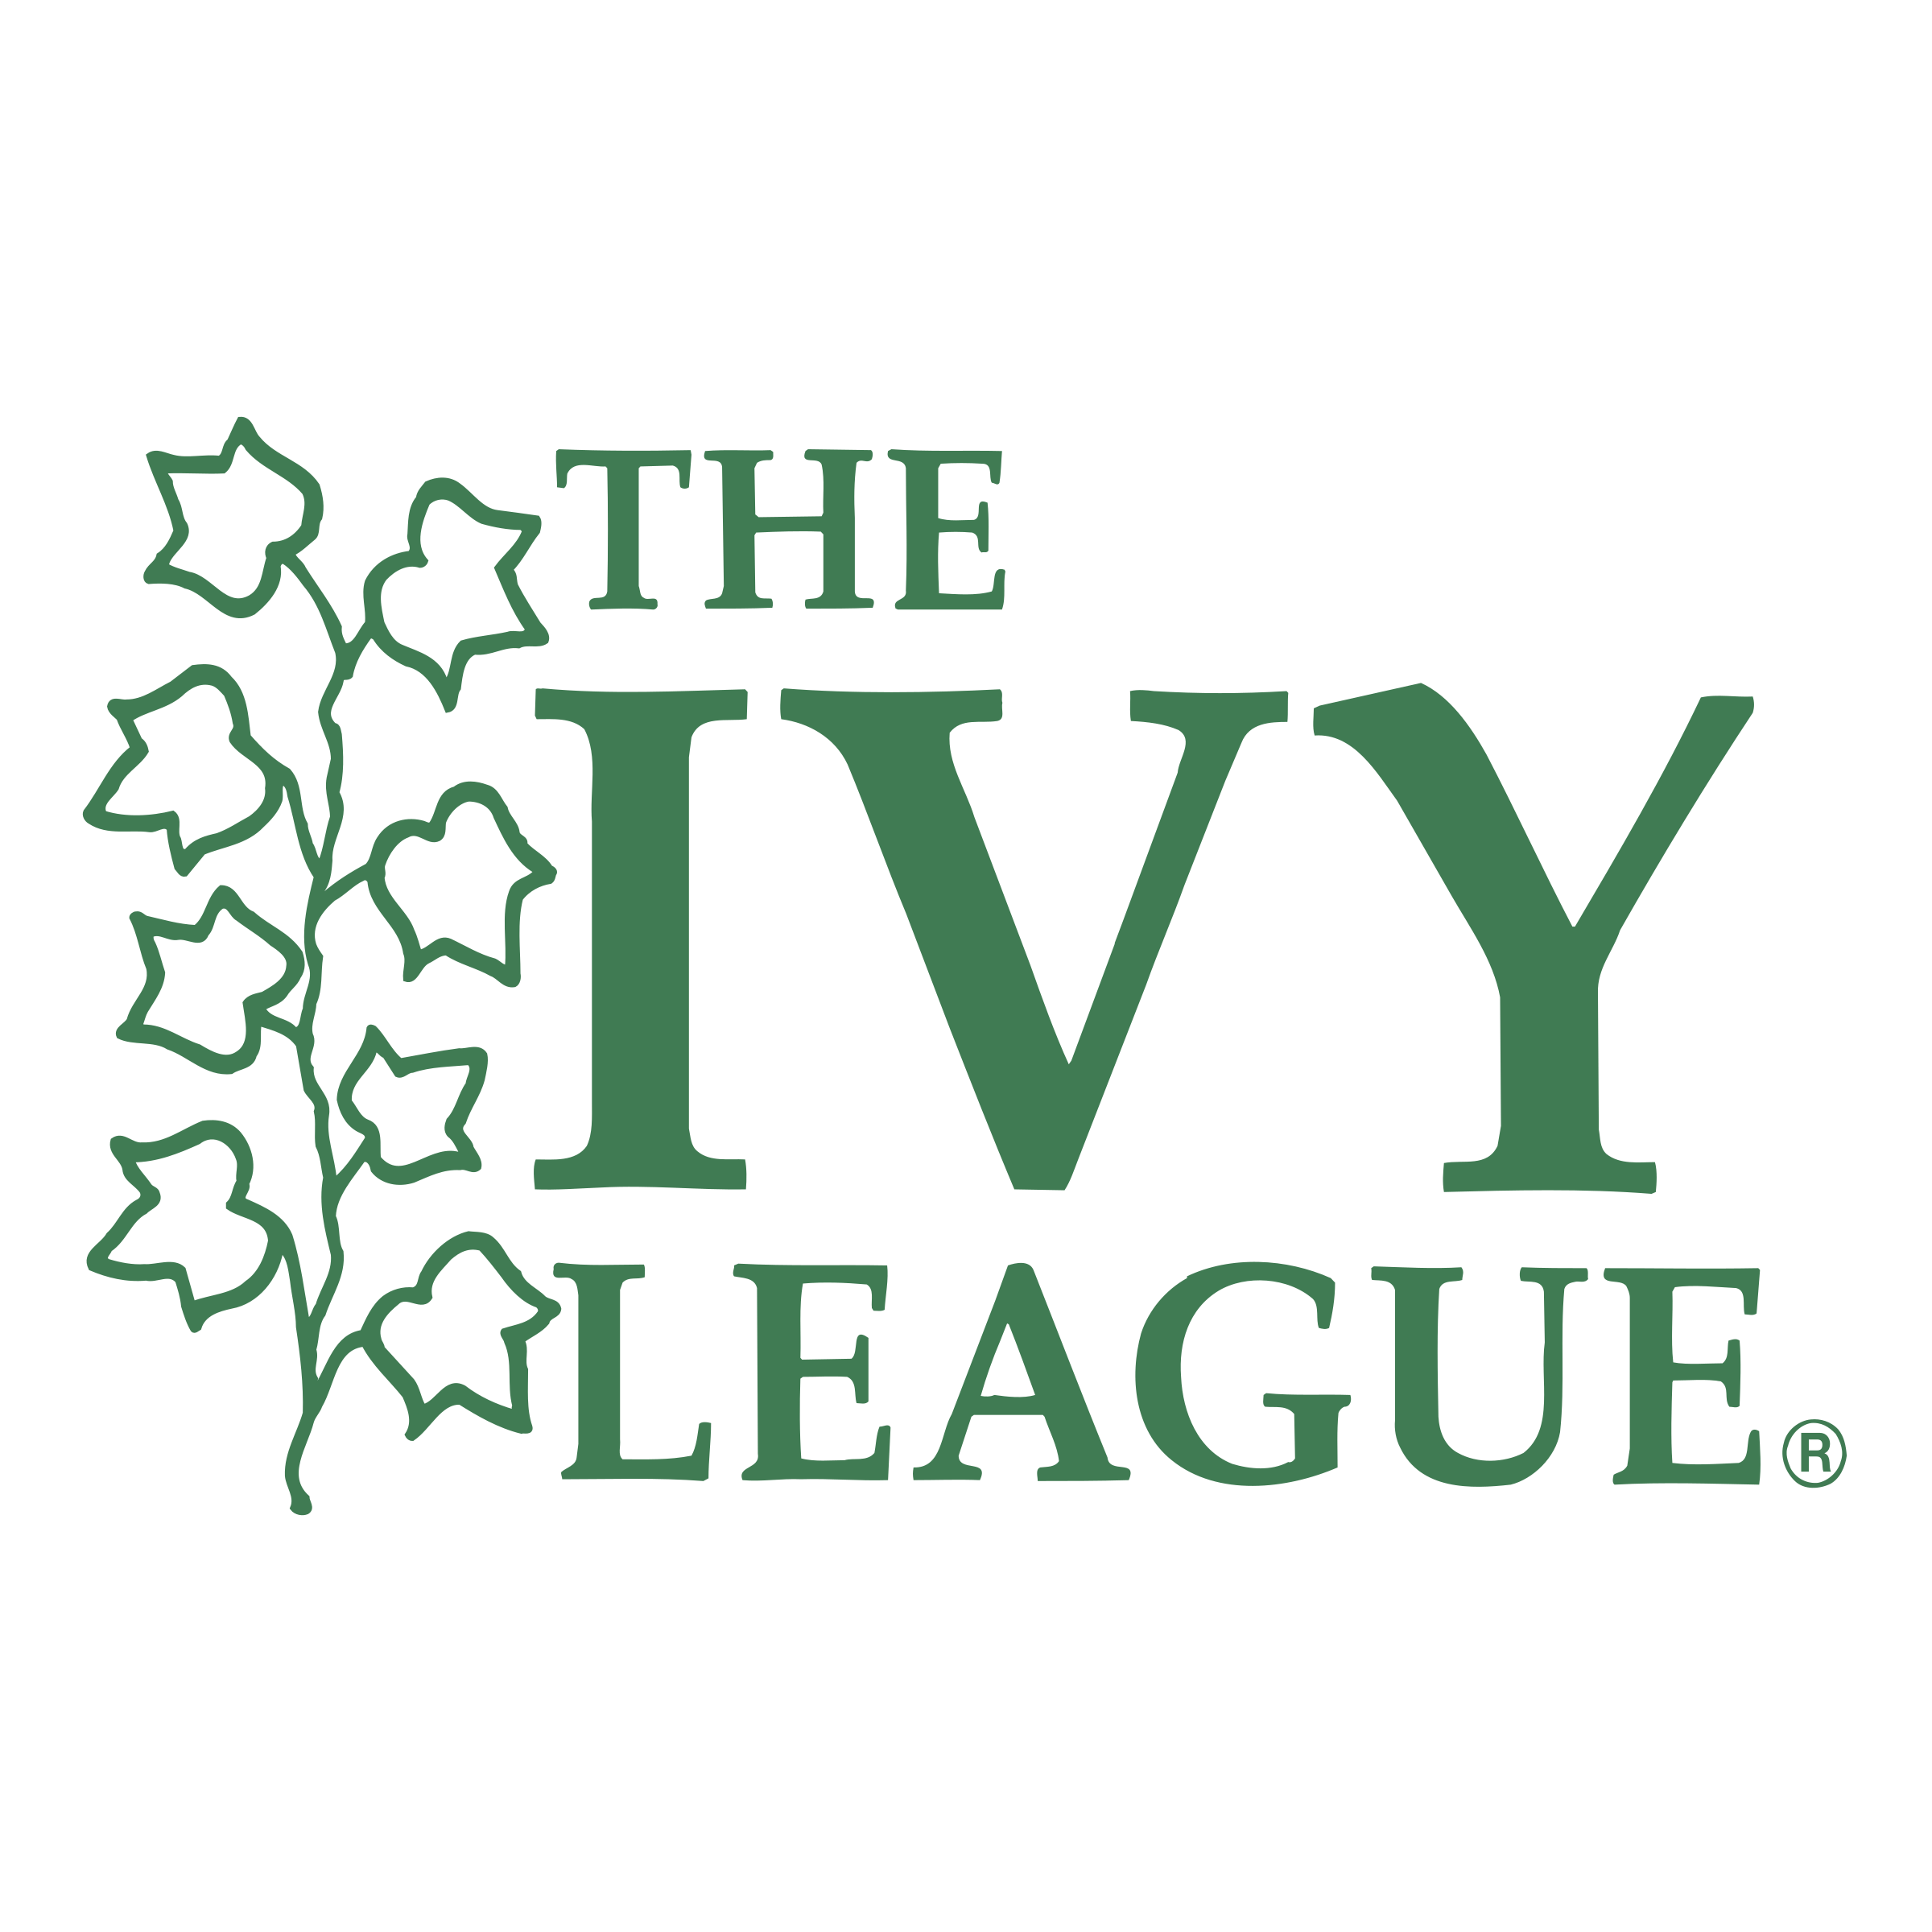 Ivy Logo - The Ivy League Logo PNG Transparent & SVG Vector